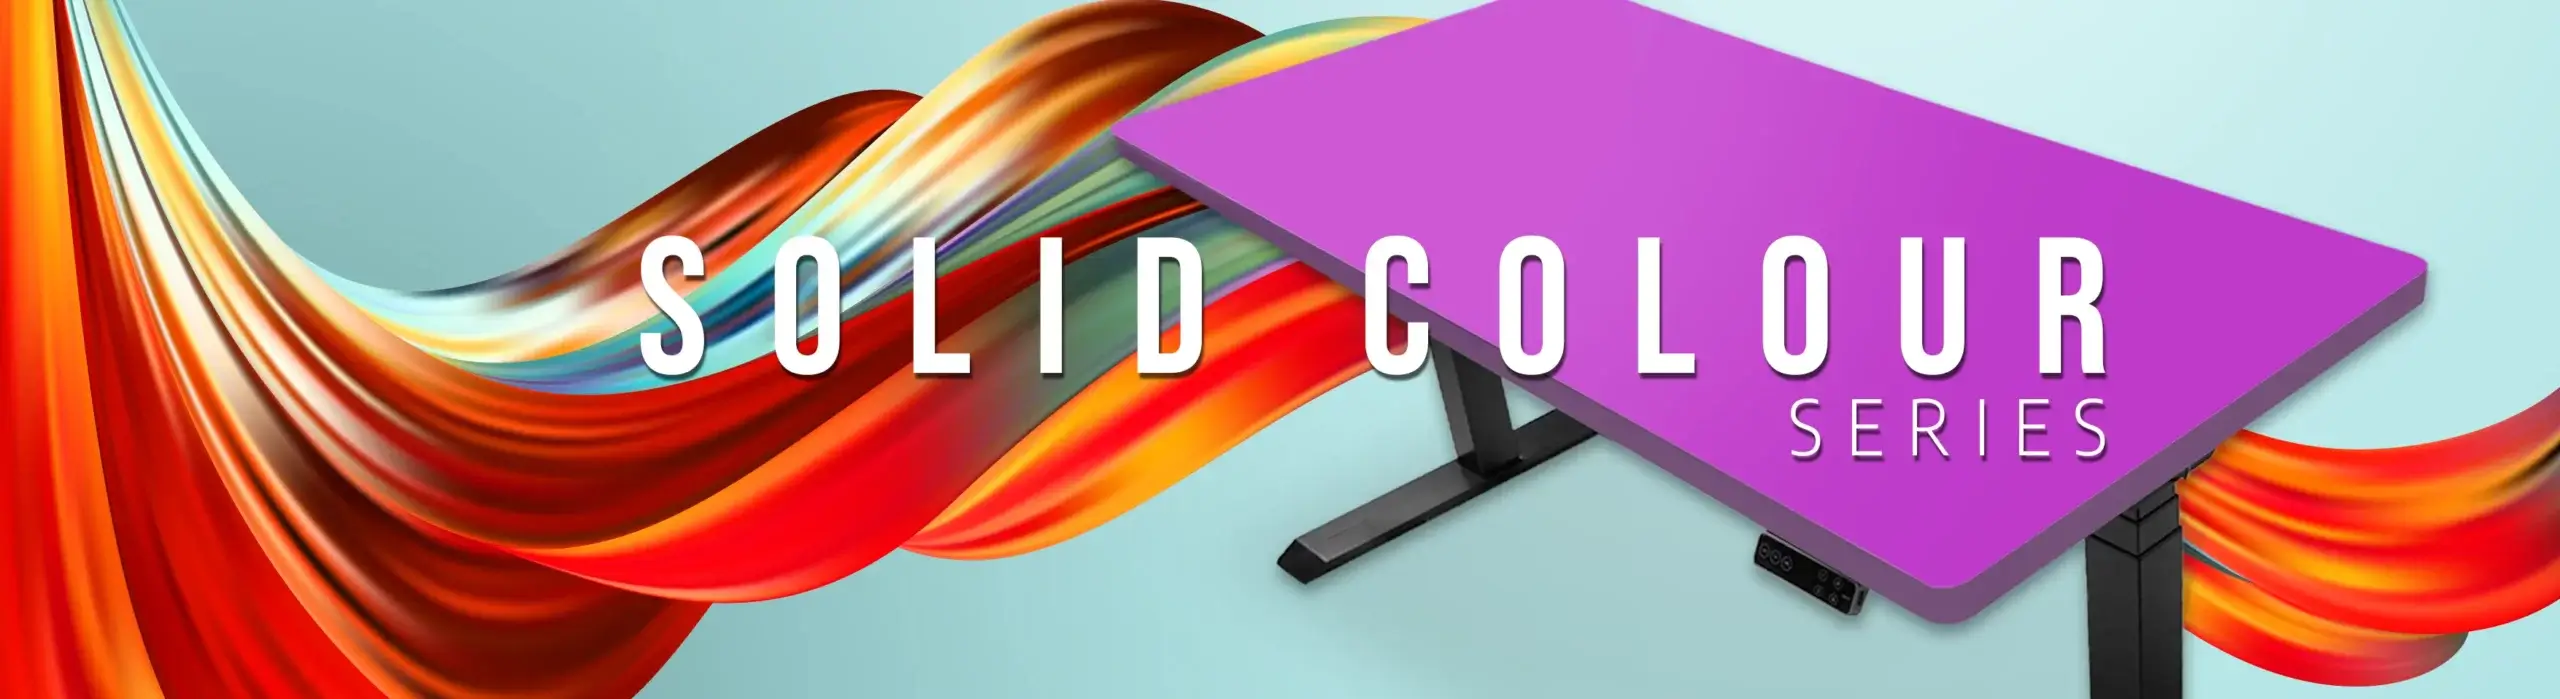 One desk Solid Color Series series vertical standing desk lamination web banner